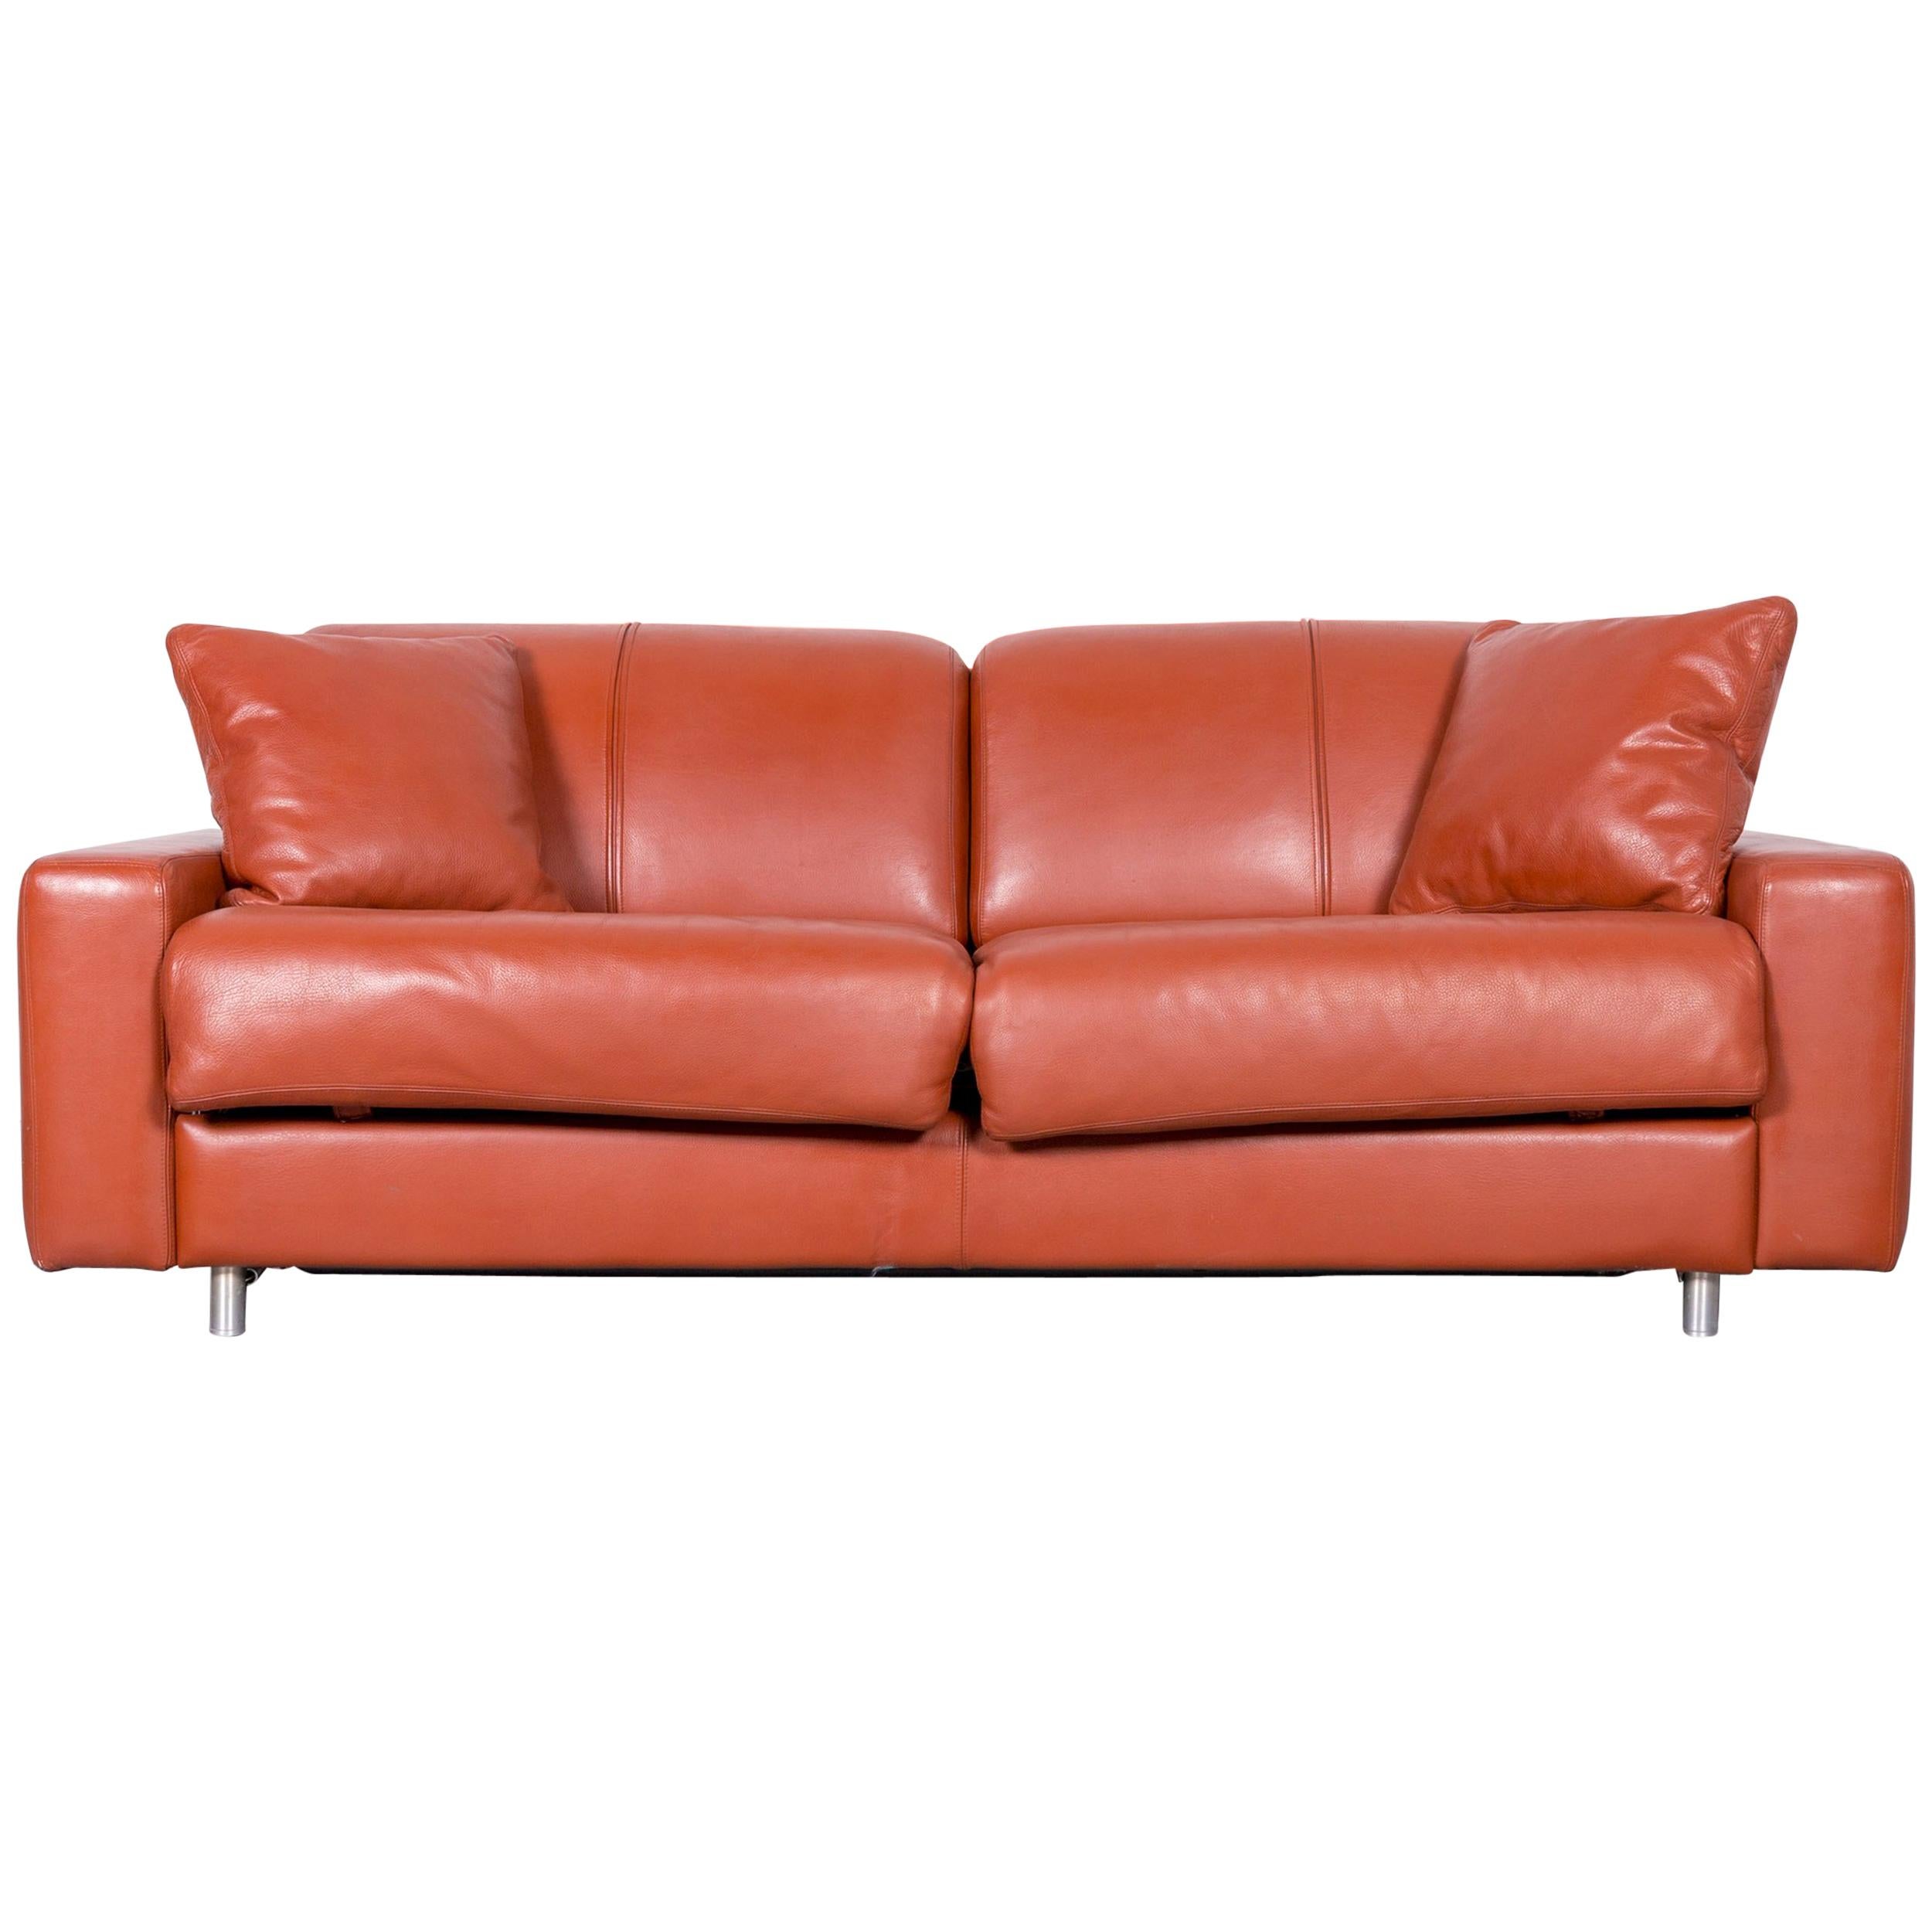 Cramer Leather Bed Sofa Orange Three-Seat Couch